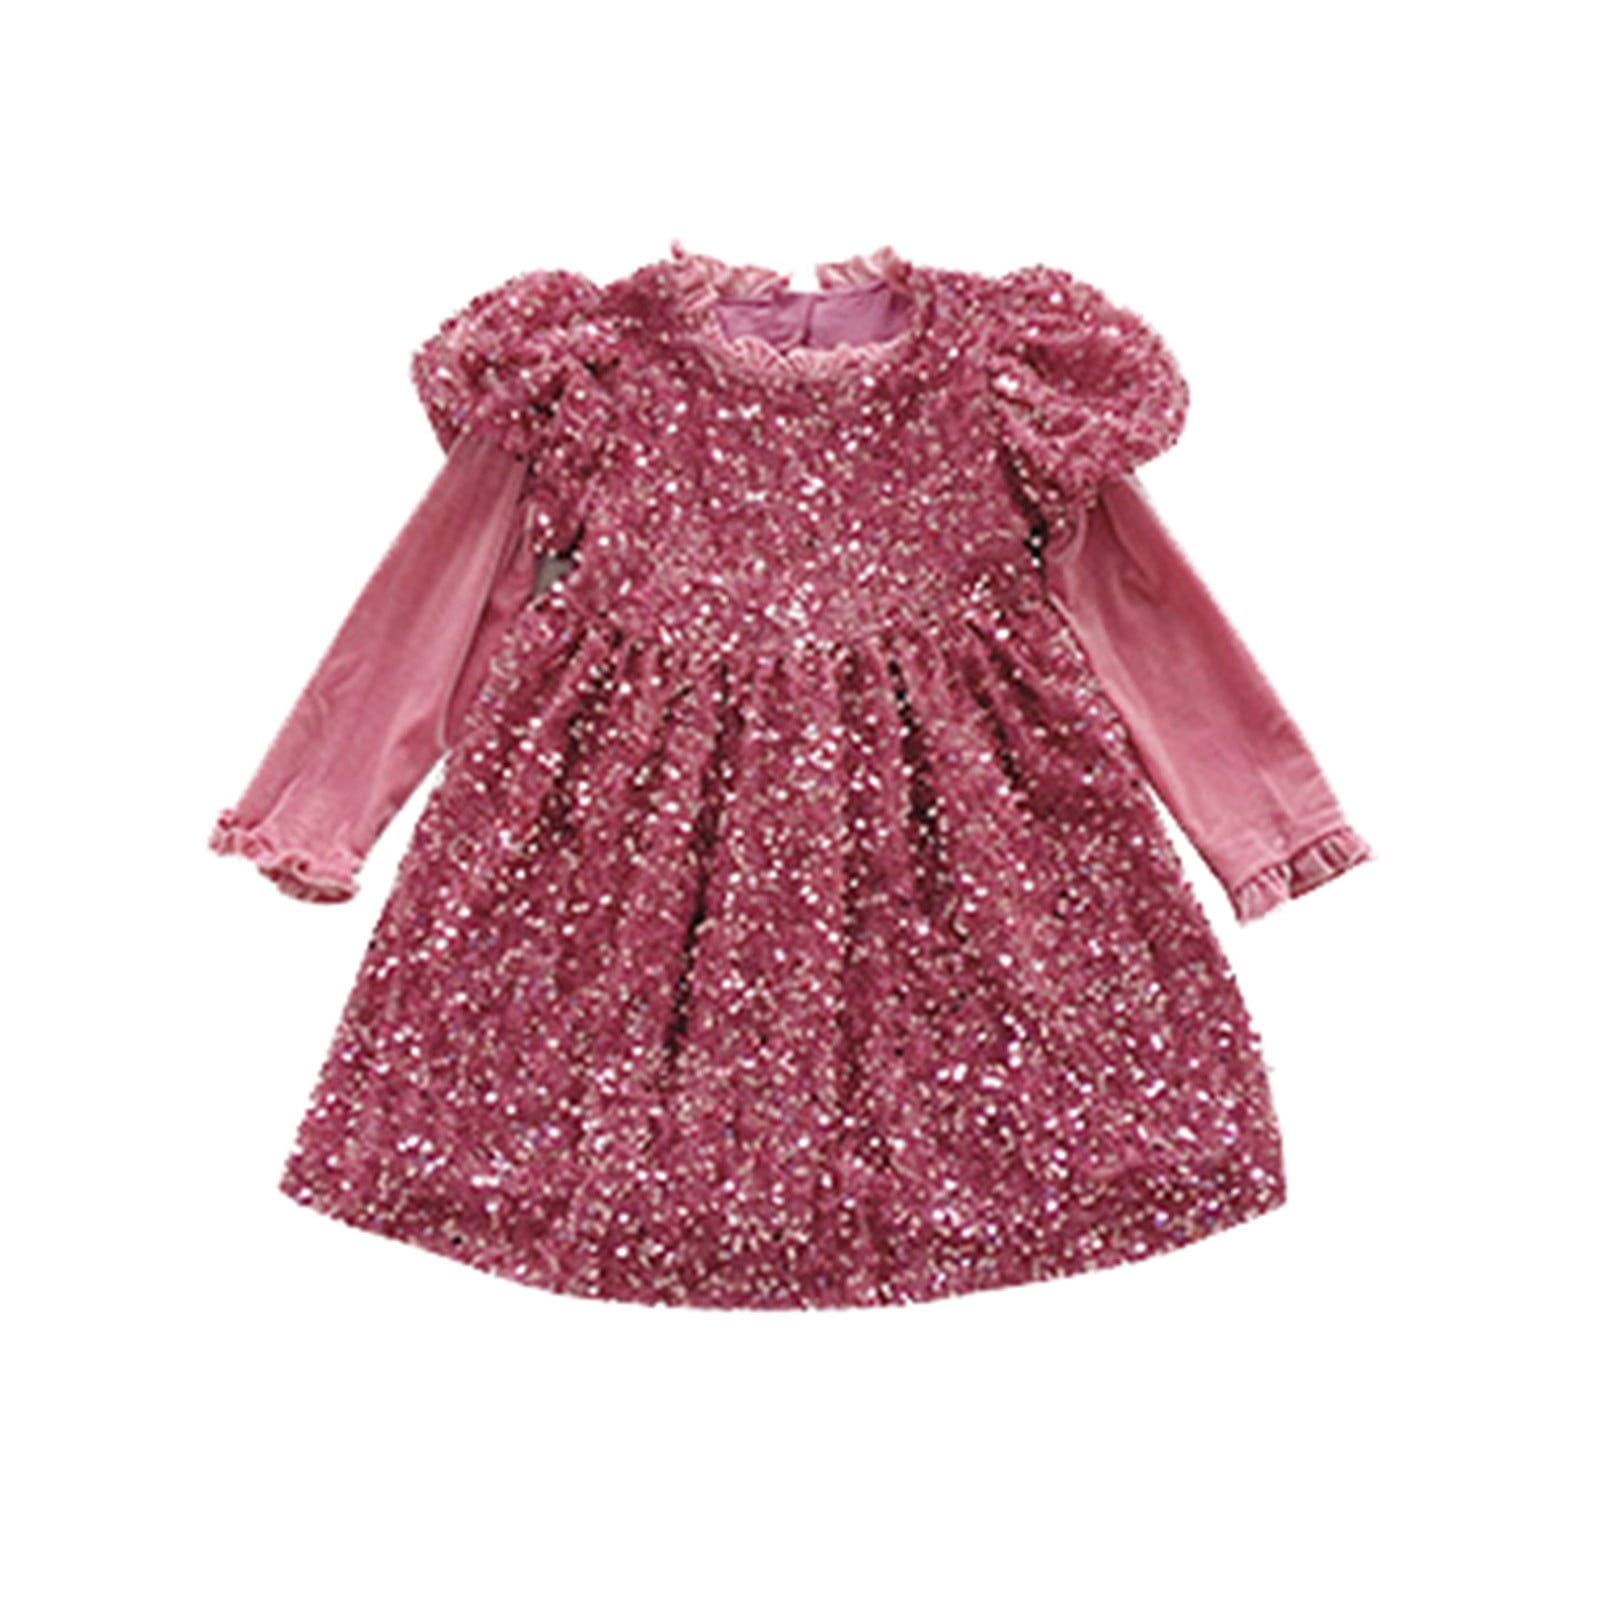 Little Girl Dresses Size 12 Months-18 Months Cute Sequin Glitter Party ...